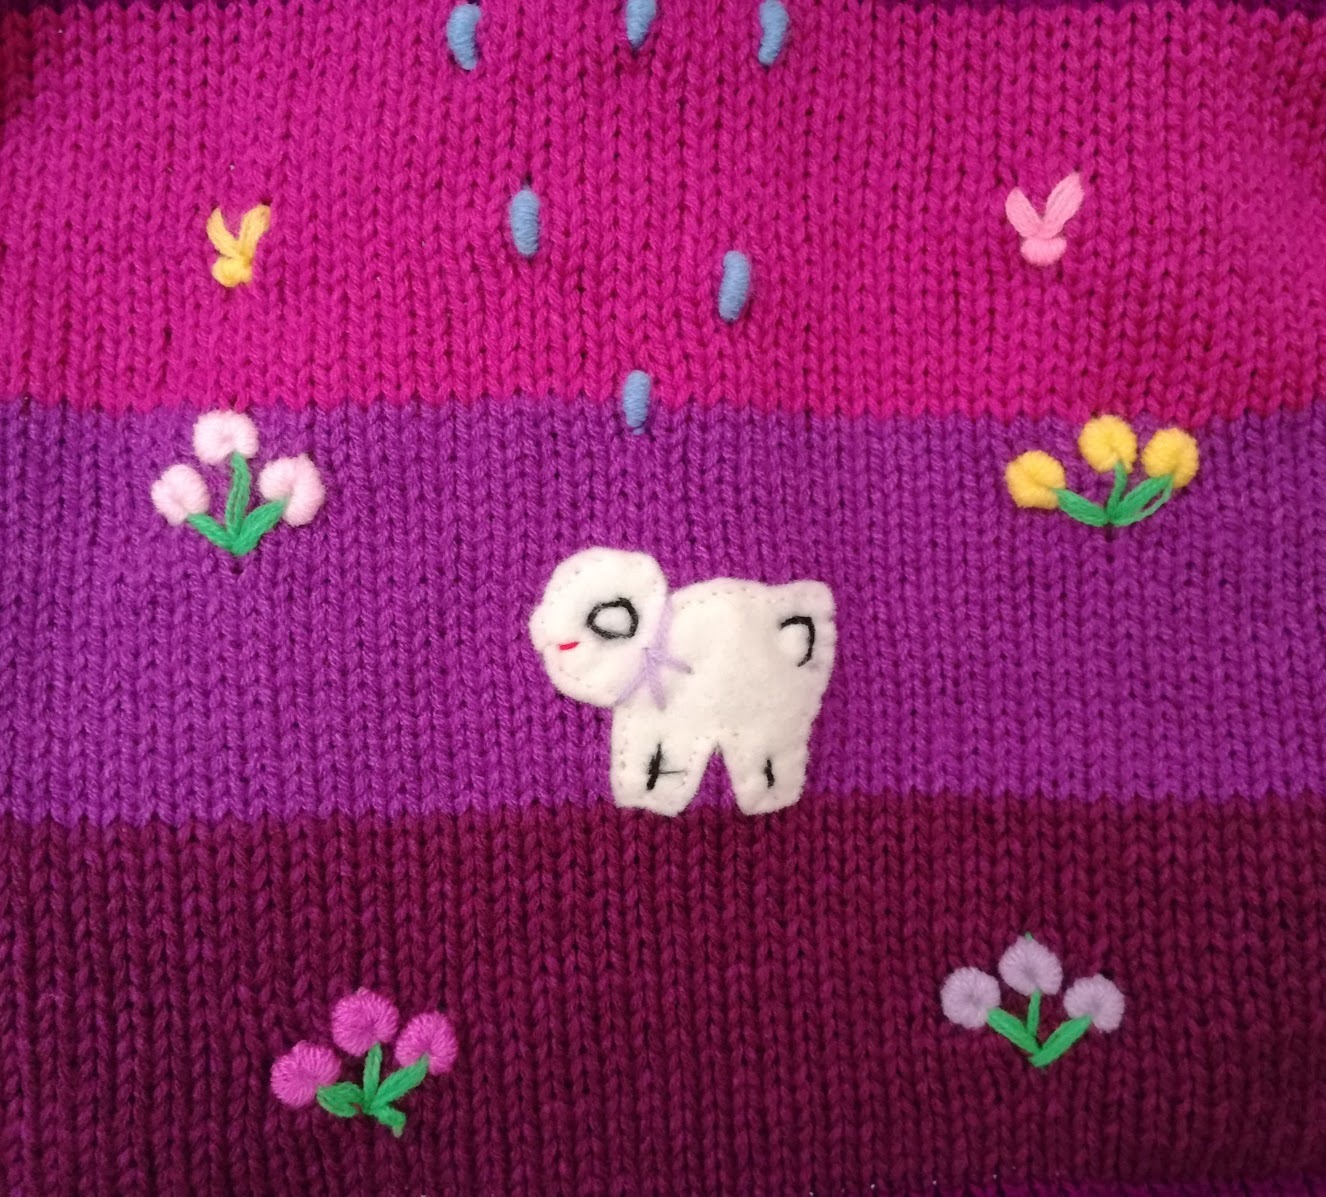 verlangen In tegenspraak Uitscheiden Peruvian cardigan sweaters purple - Peruvian sweater - Alpaca sweater Peru